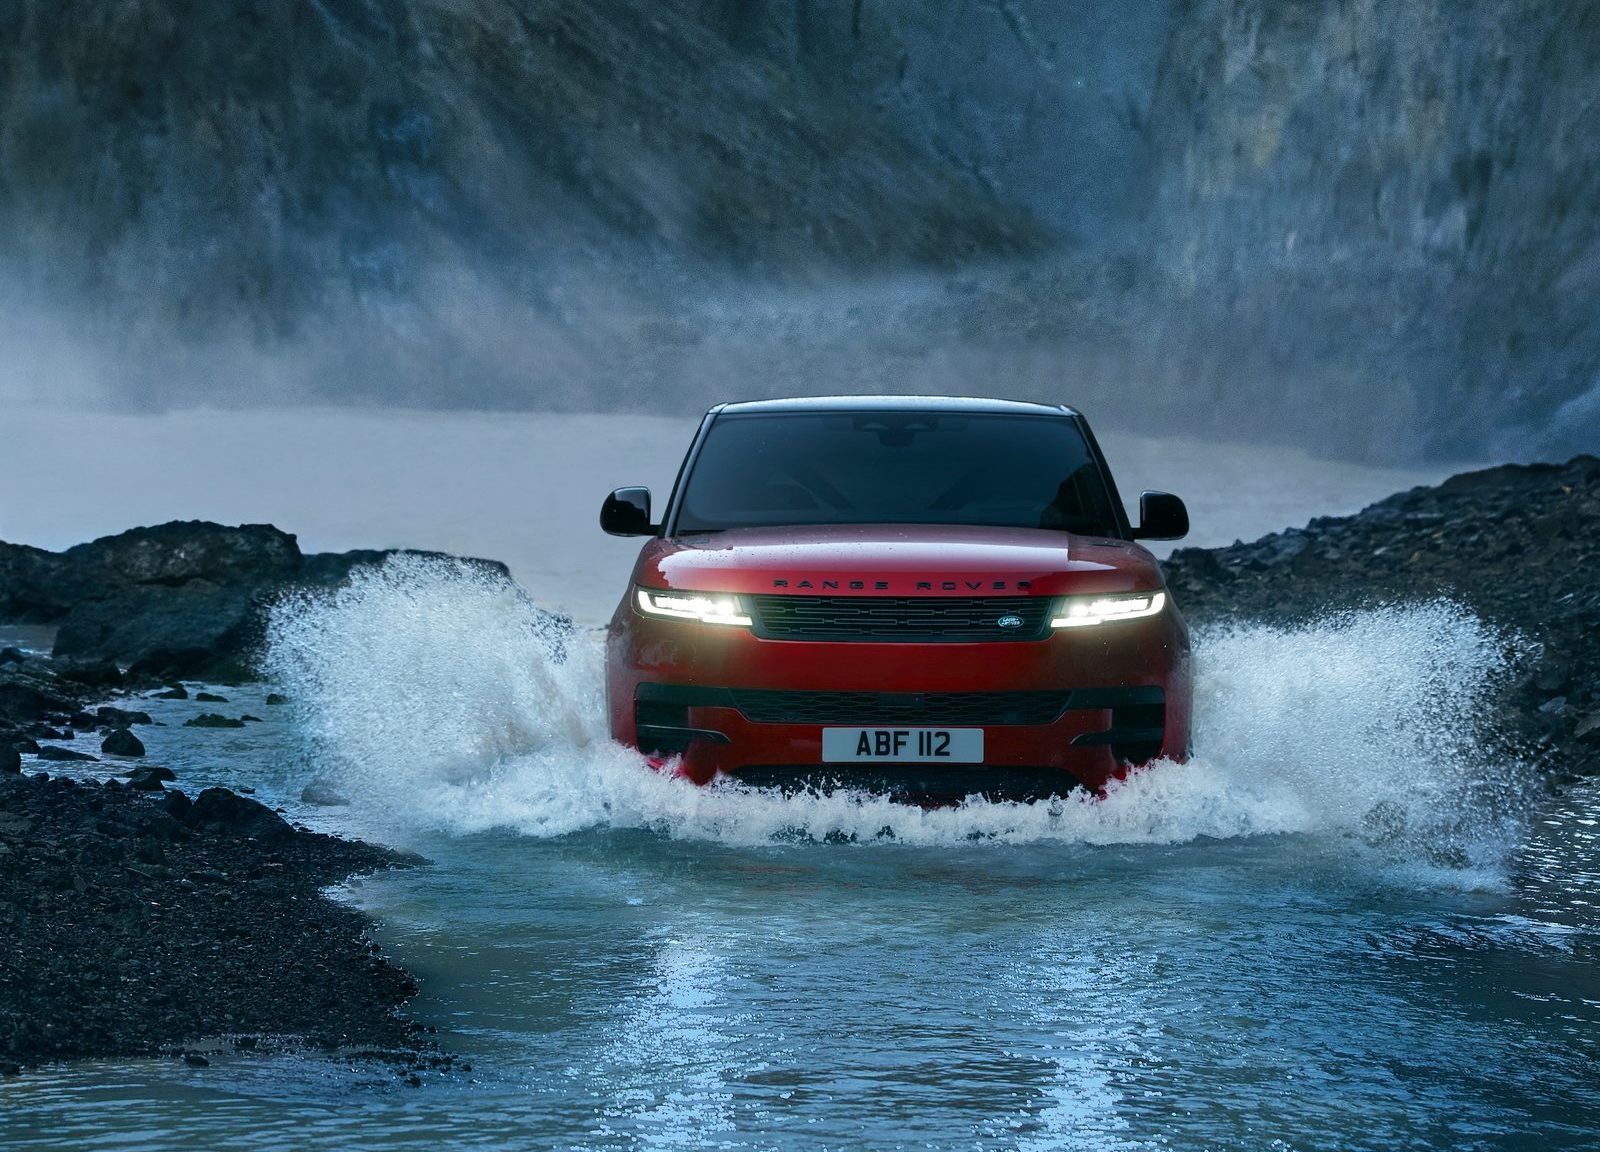 2023 Range Rover Sport: Absolutely regal, longer wheelbase, more suave